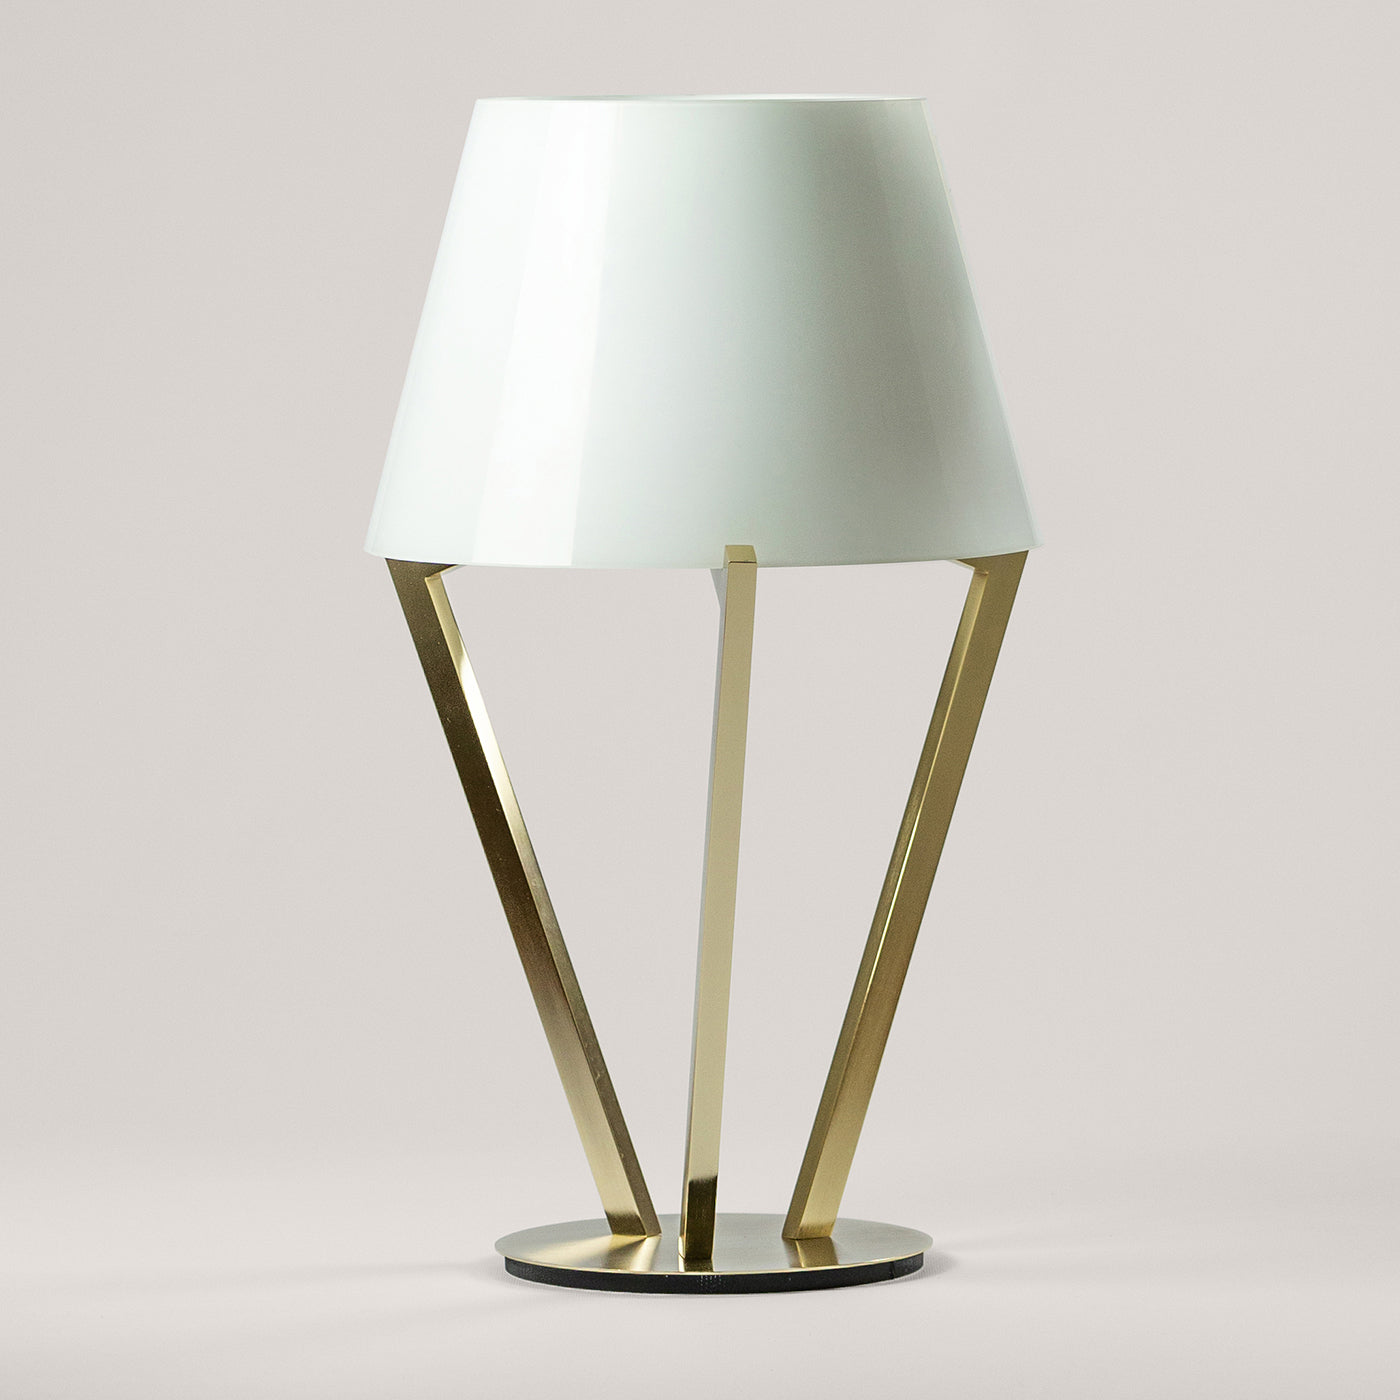 Zena Table Lamp #1 - Alternative view 4